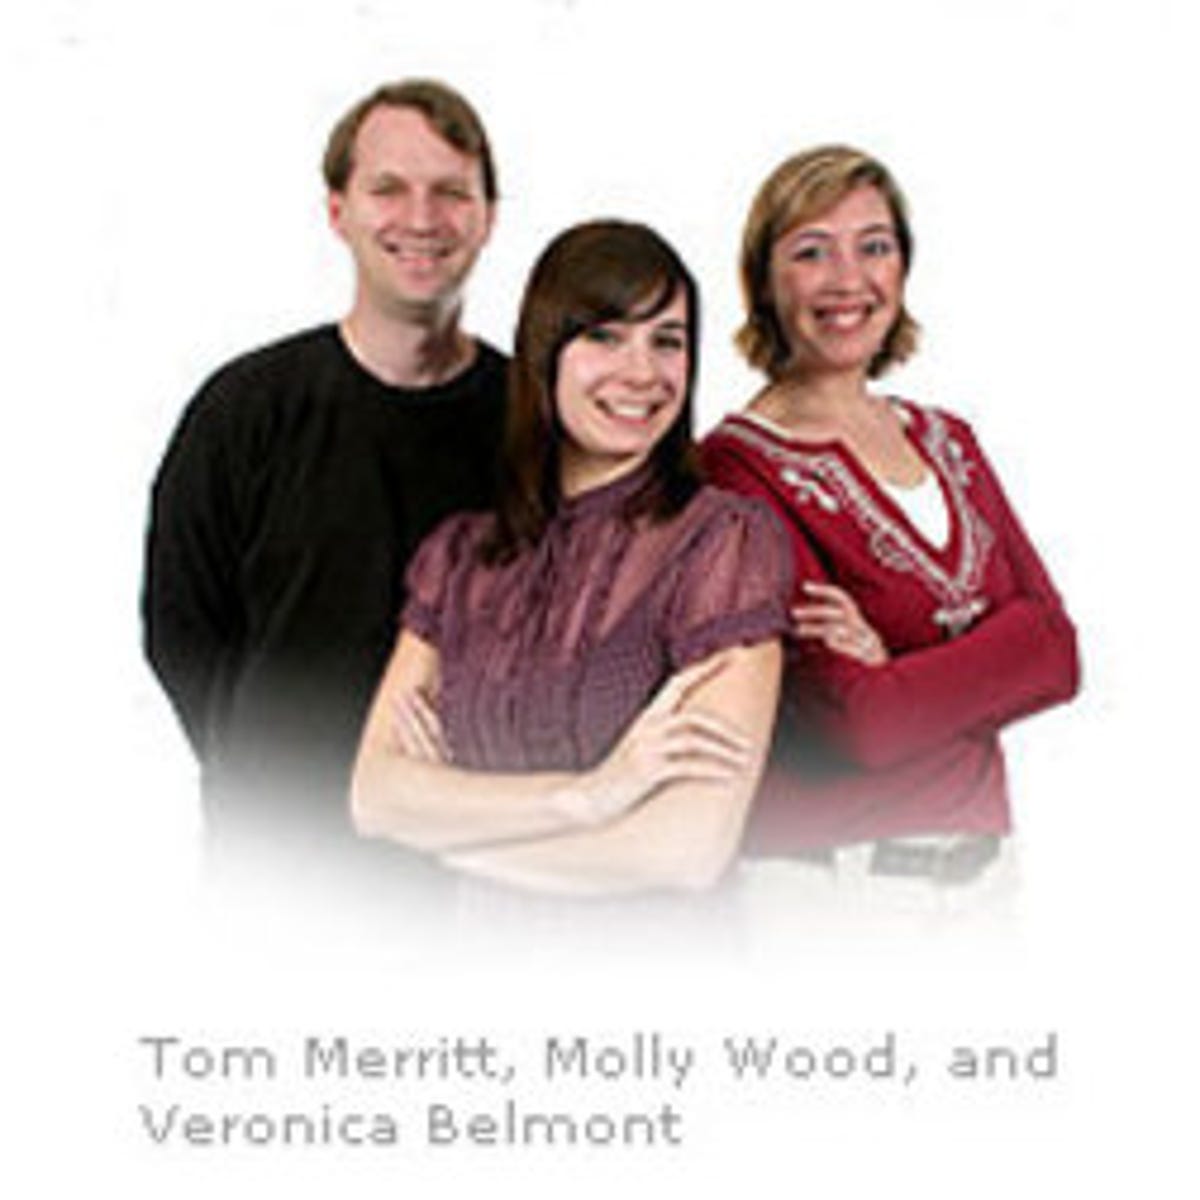 Tom Merritt, Molly Wood, and Veronica Belmont